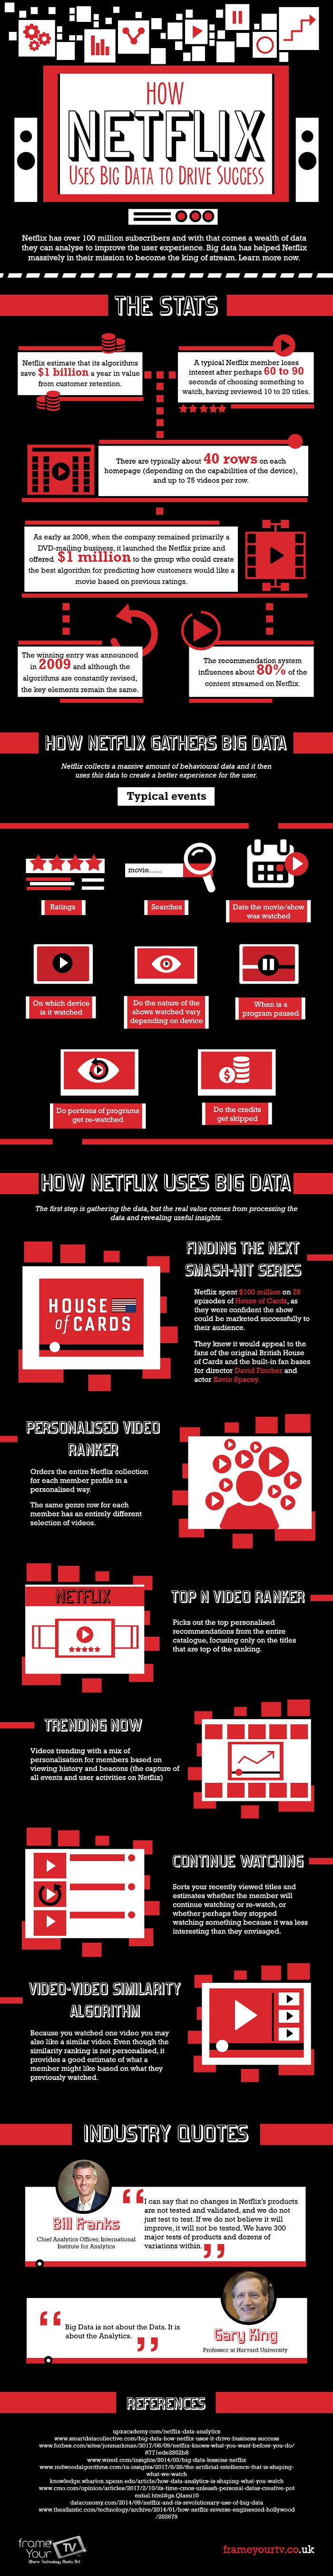 Hvorfor big data er viktig for Netflix?